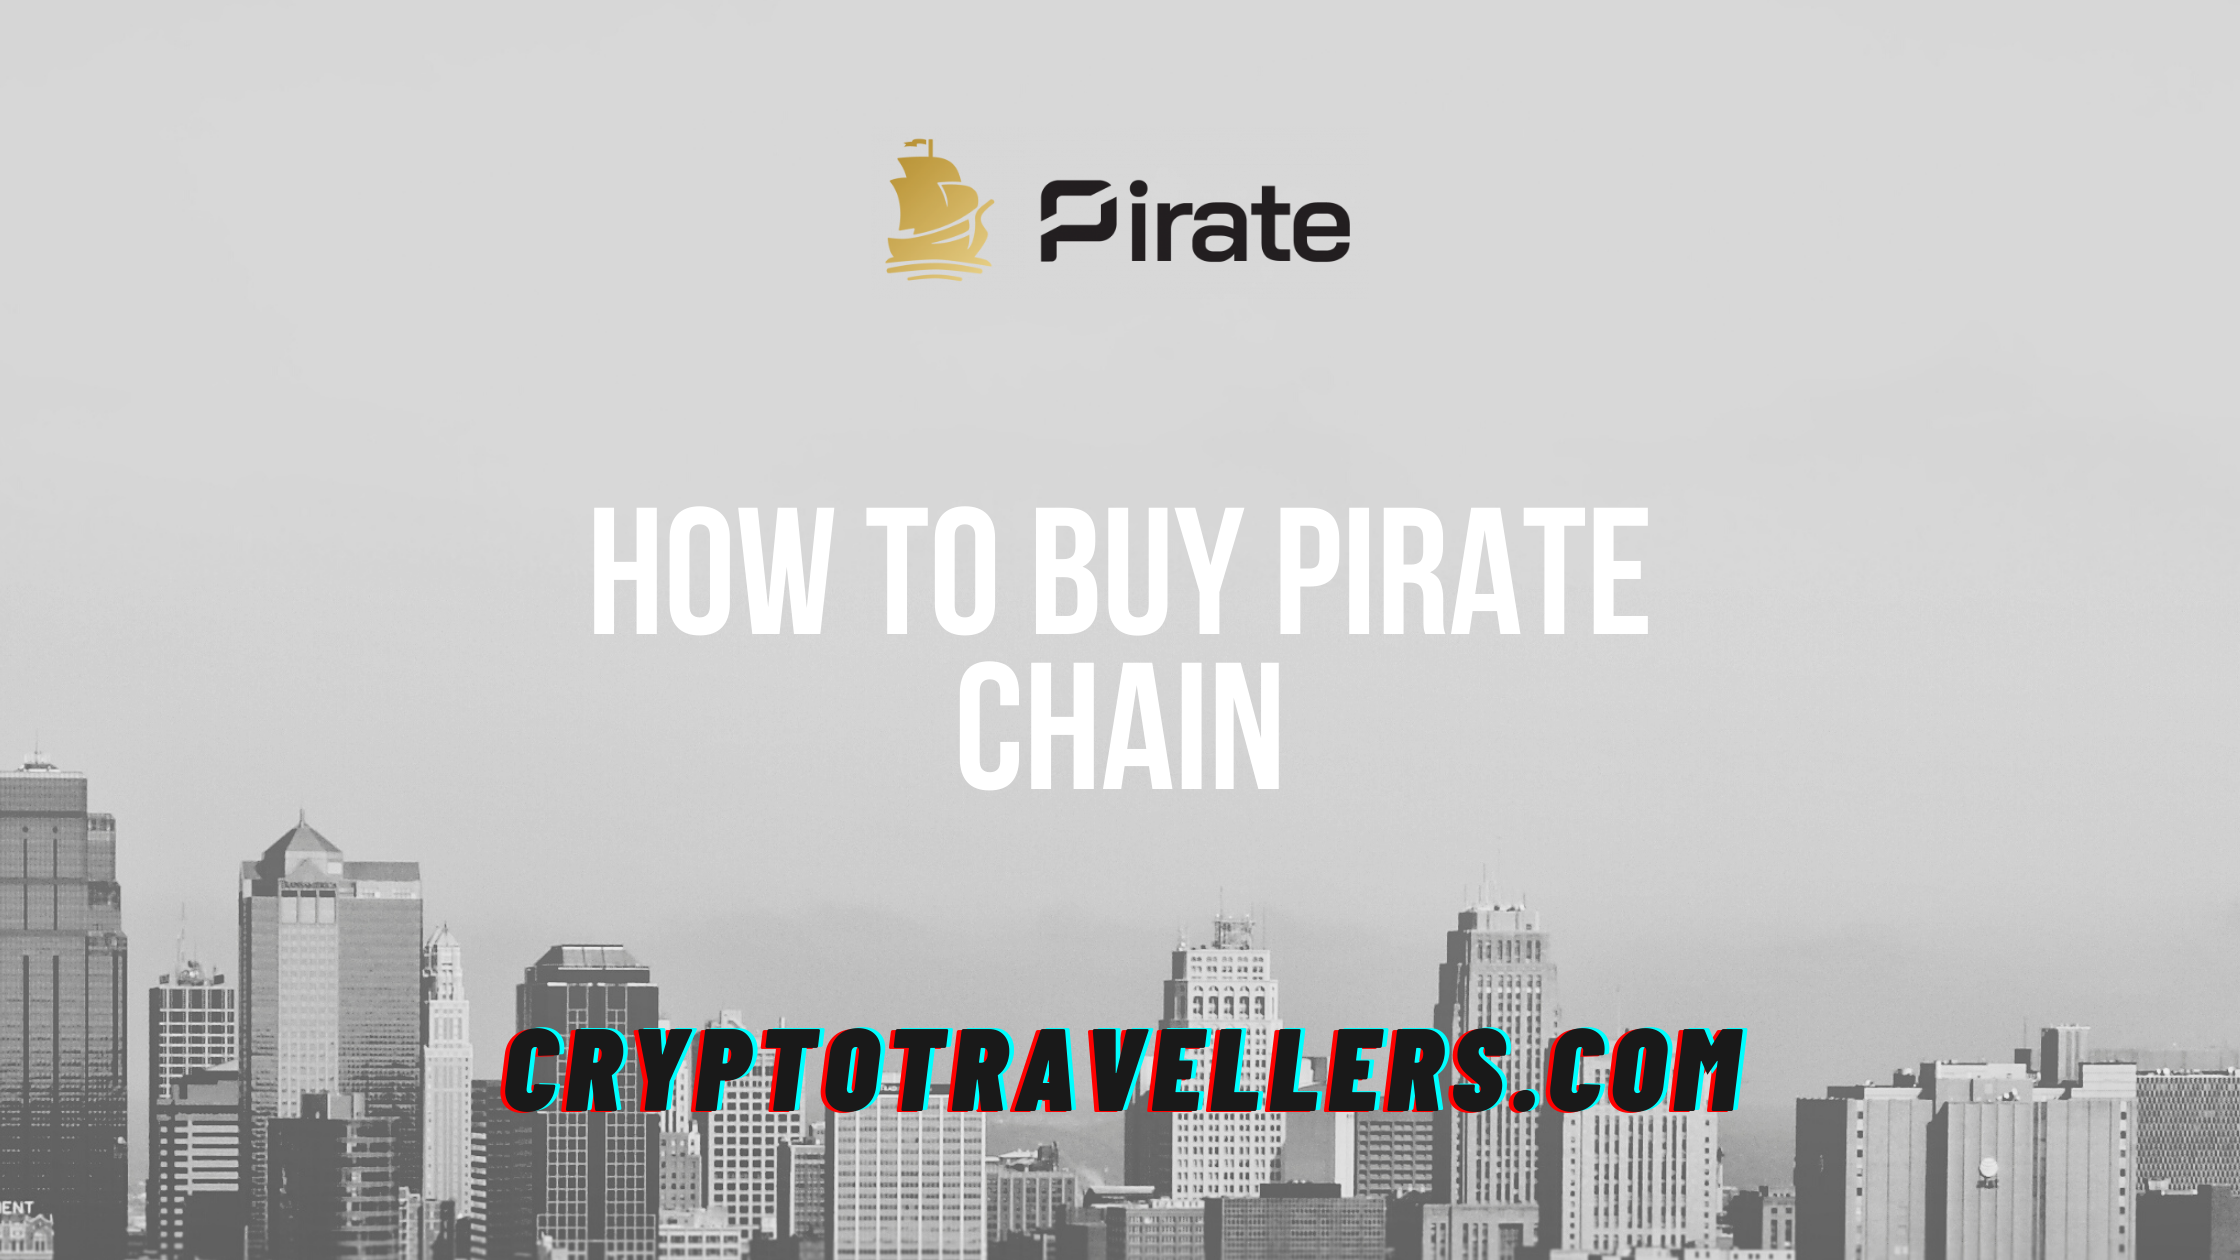 pirate chain crypto price